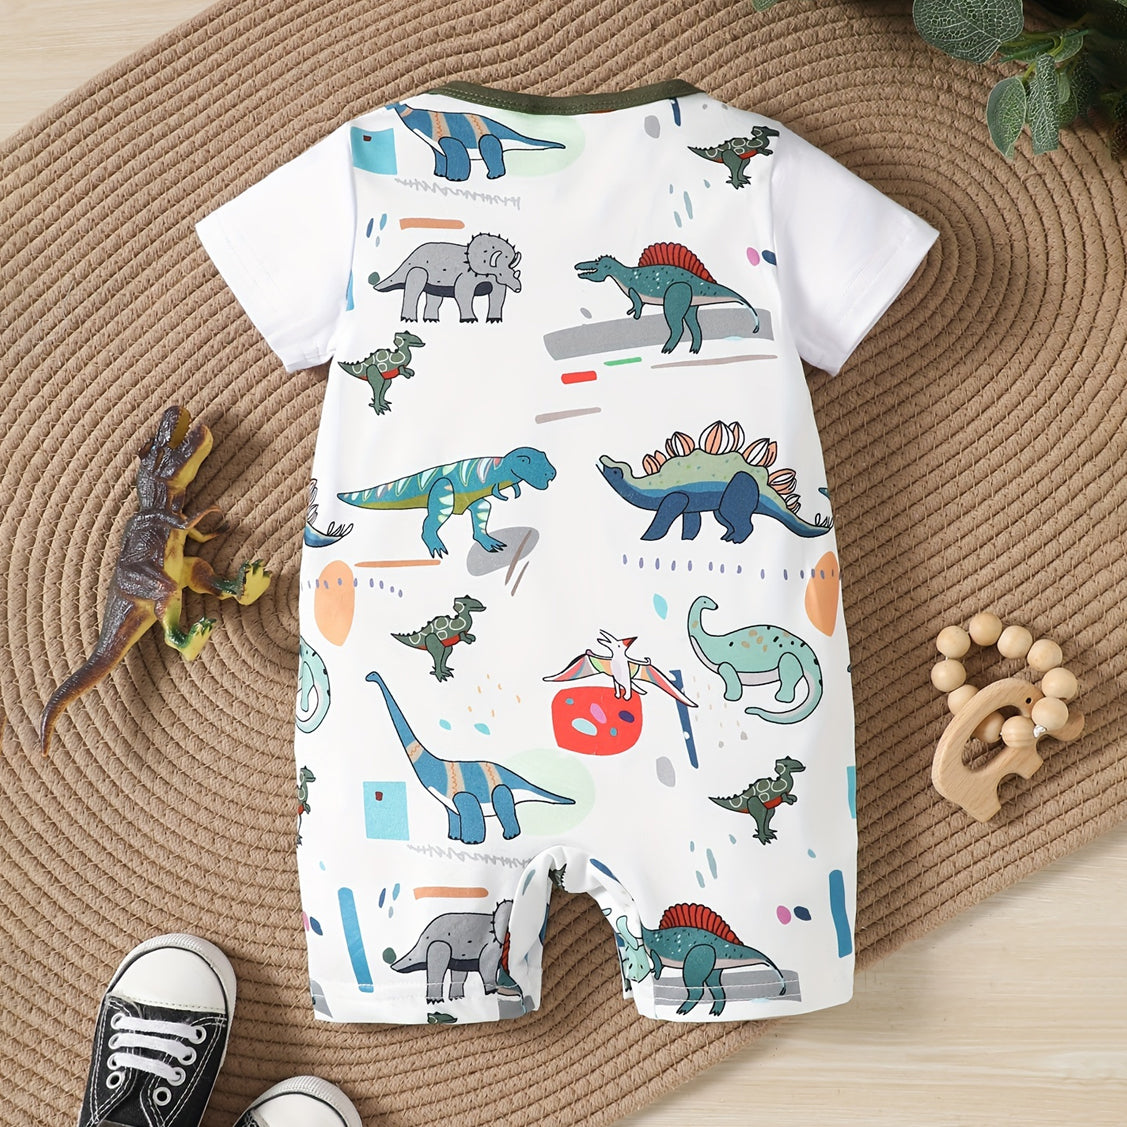 Stylish Dinosaur Printed Short Sleeve Baby Jumpsuit